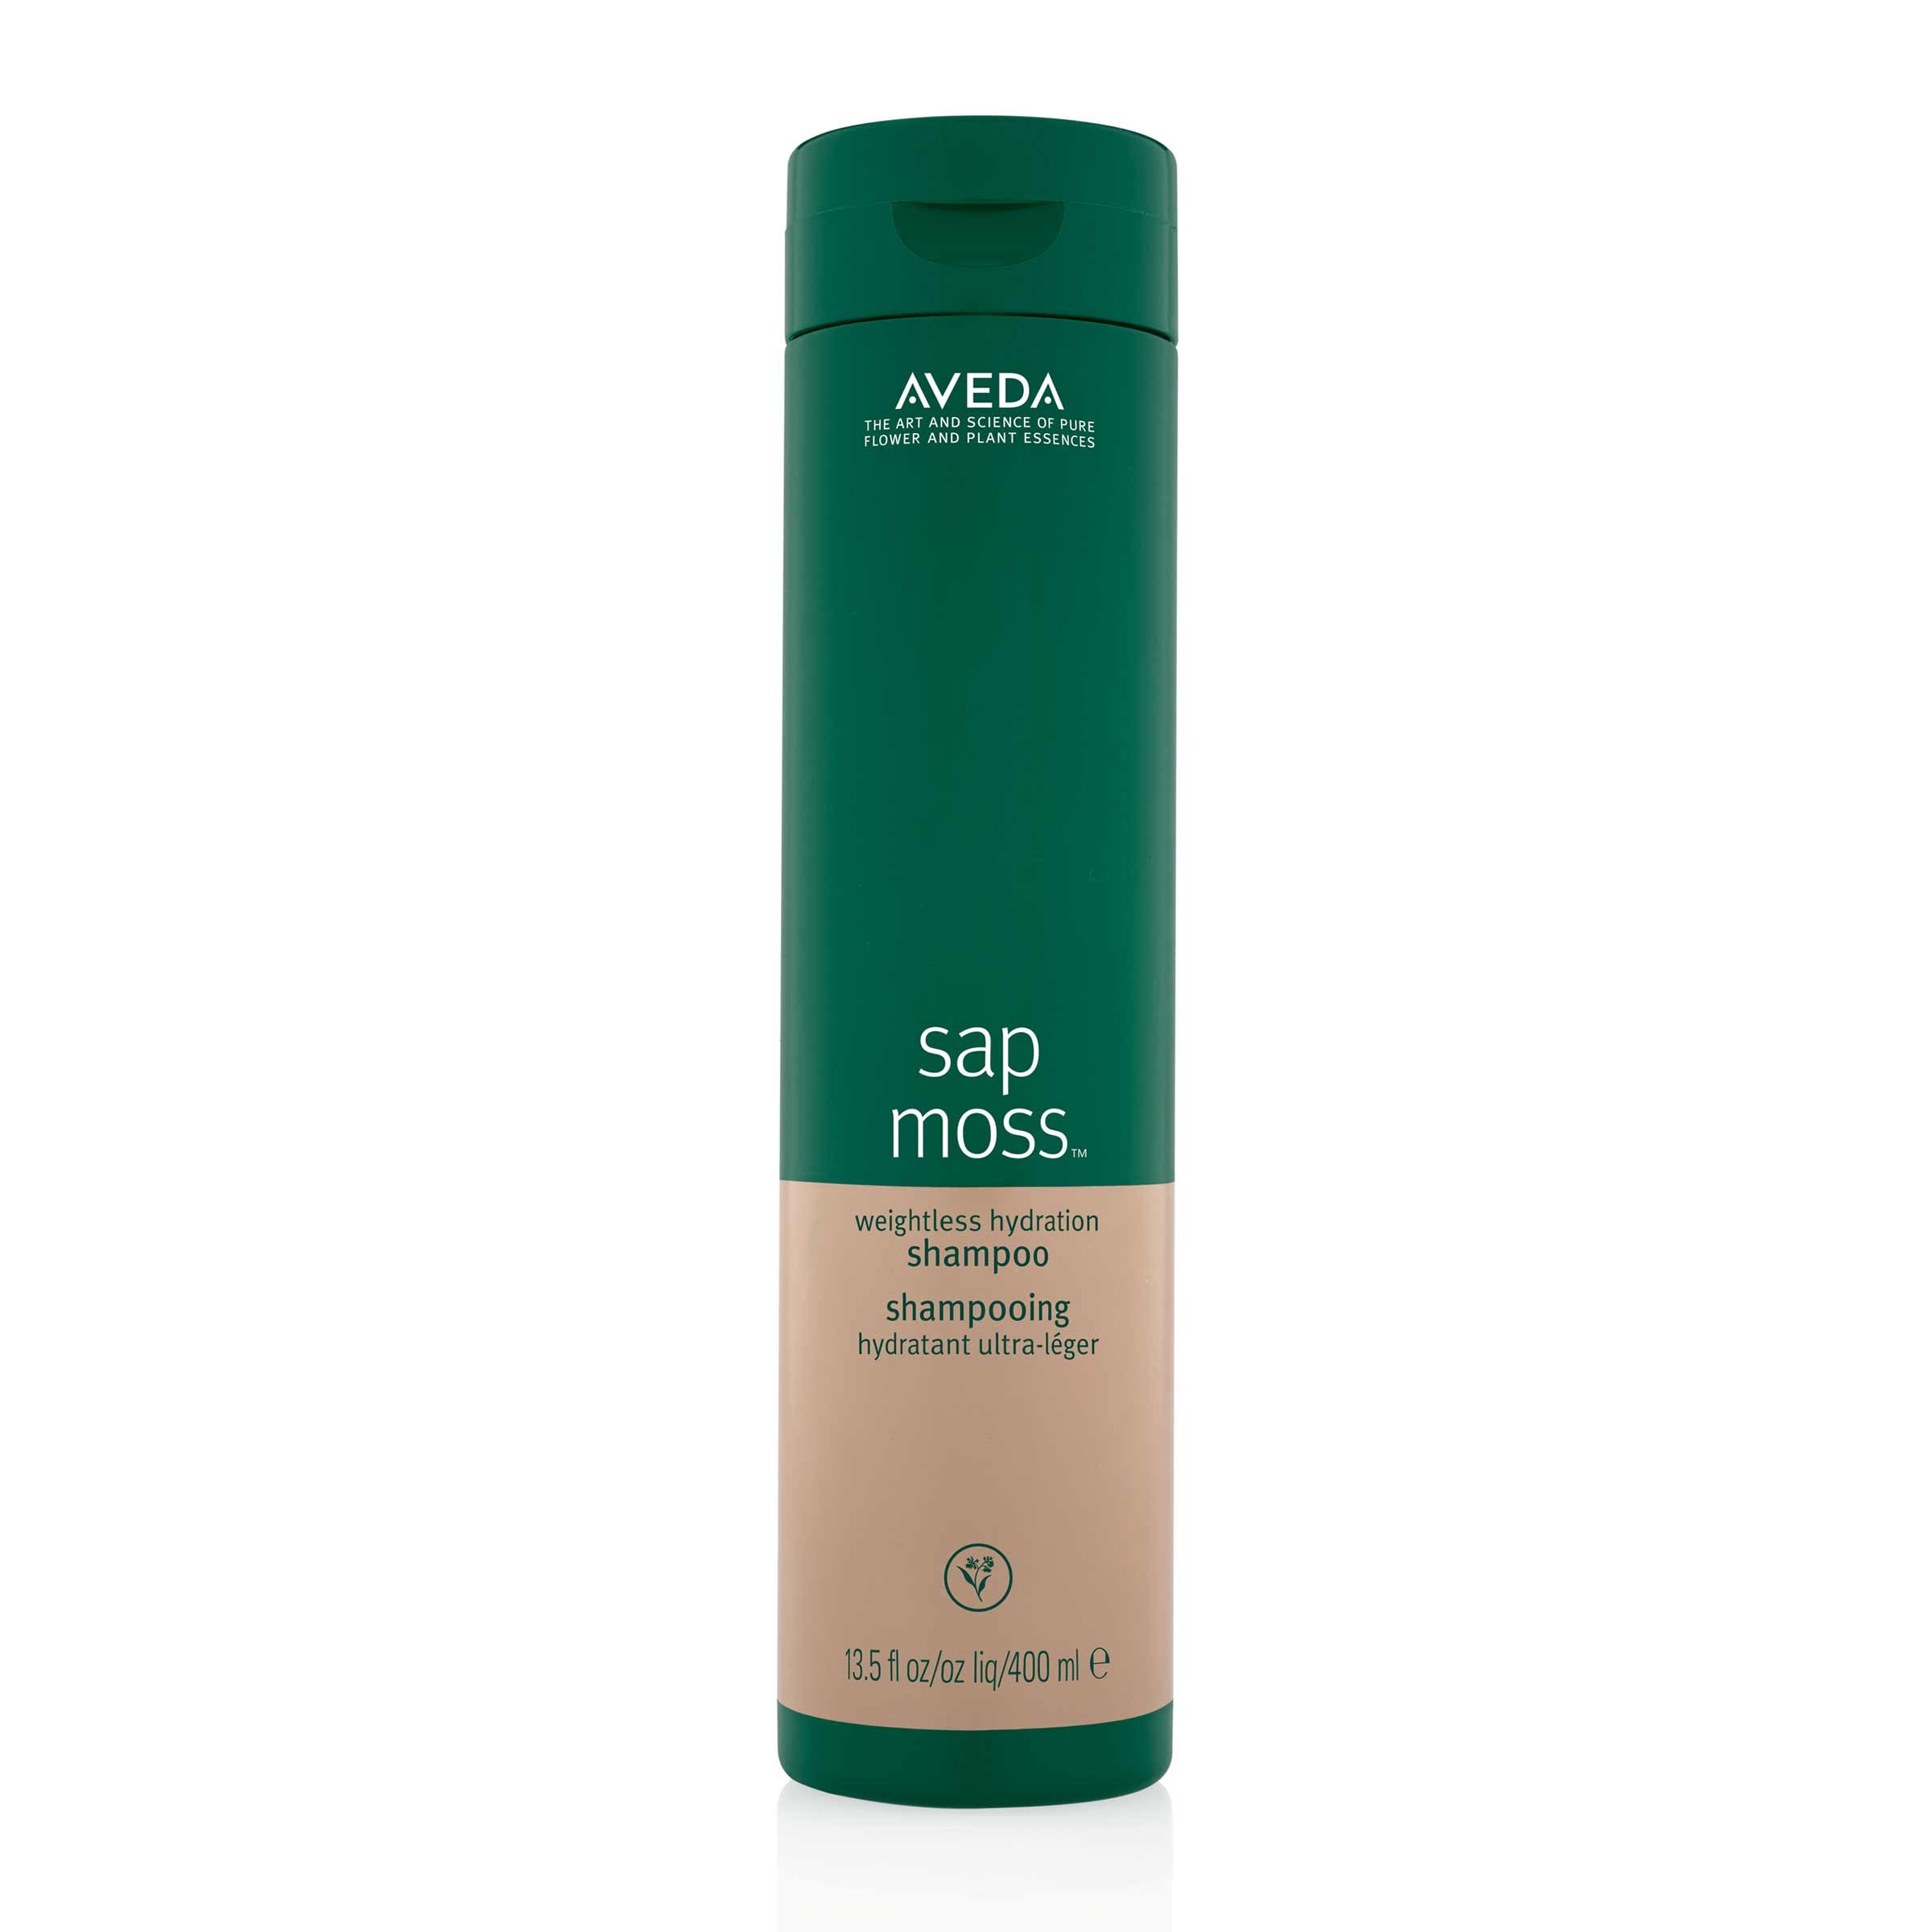 sap moss weightless hydration shampoo